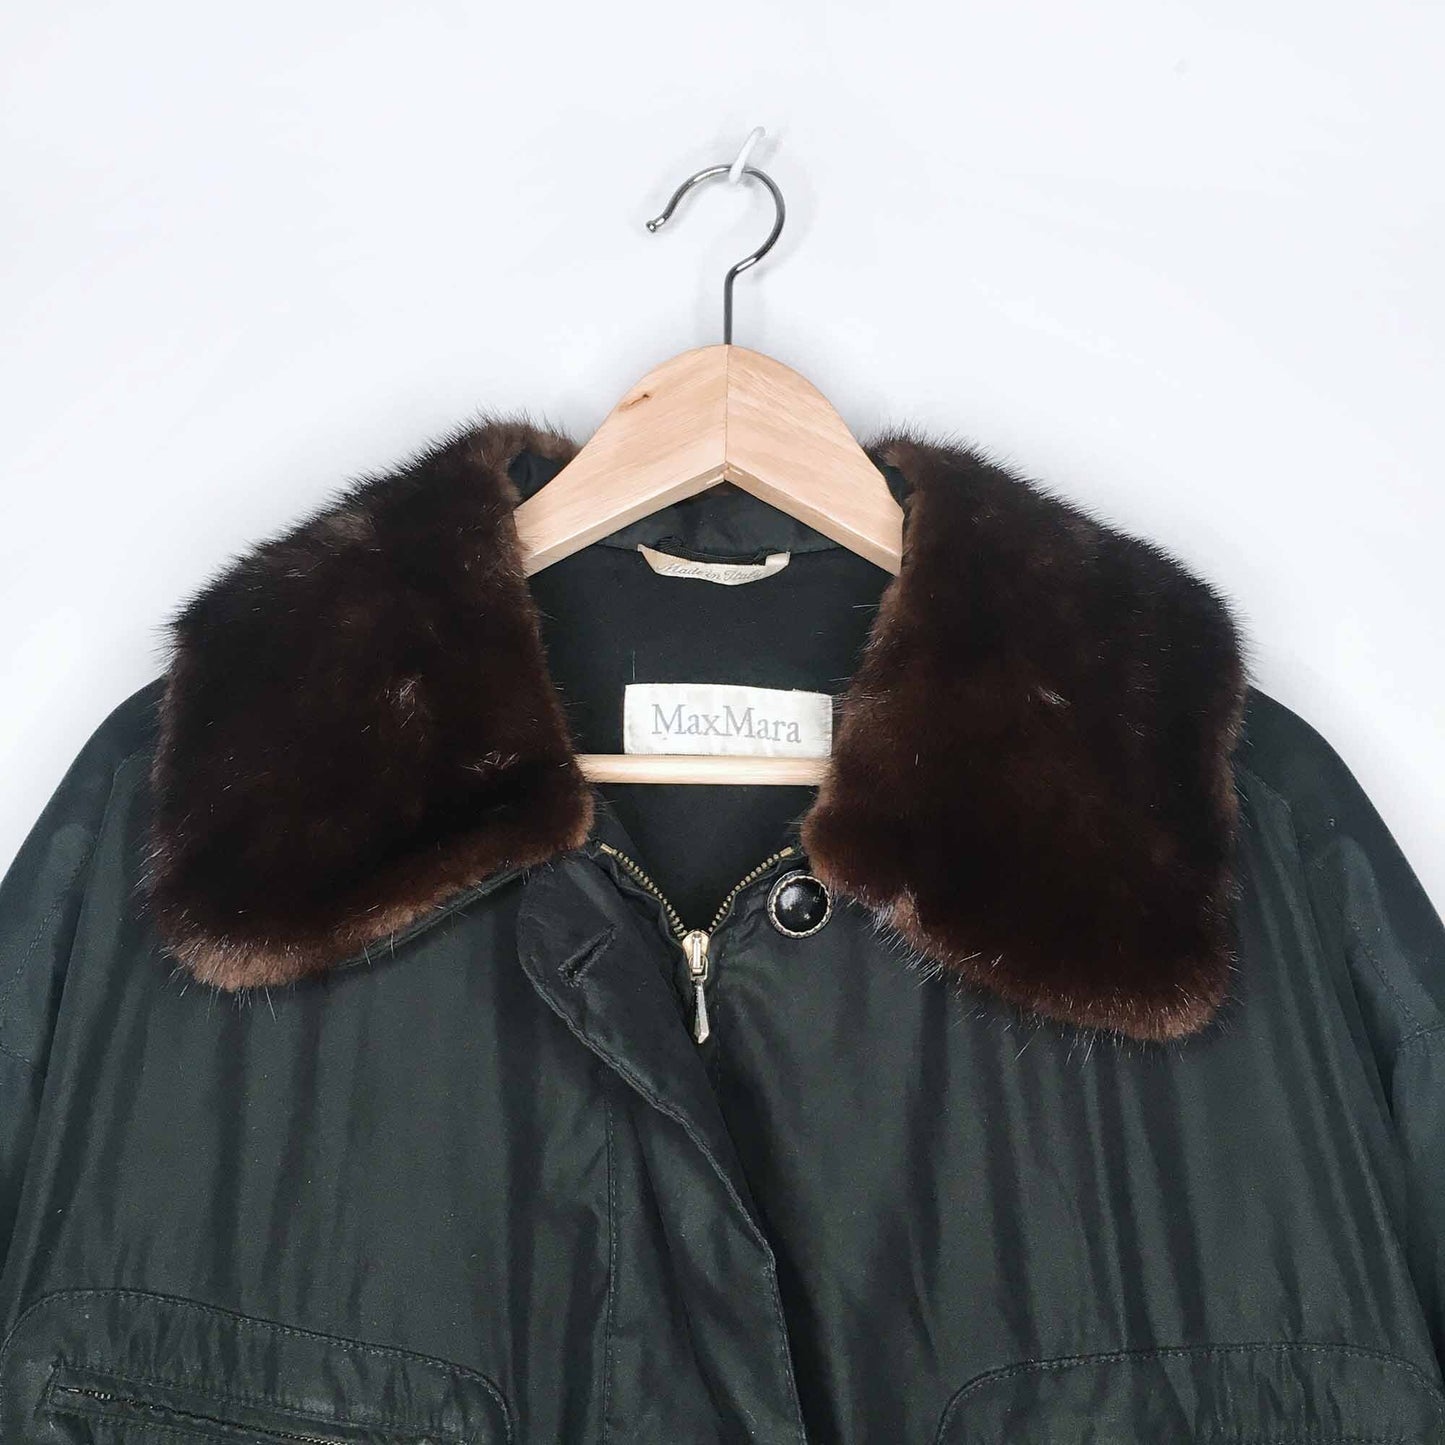 Vintage Max Mara puff jacket with fur collar - size 8